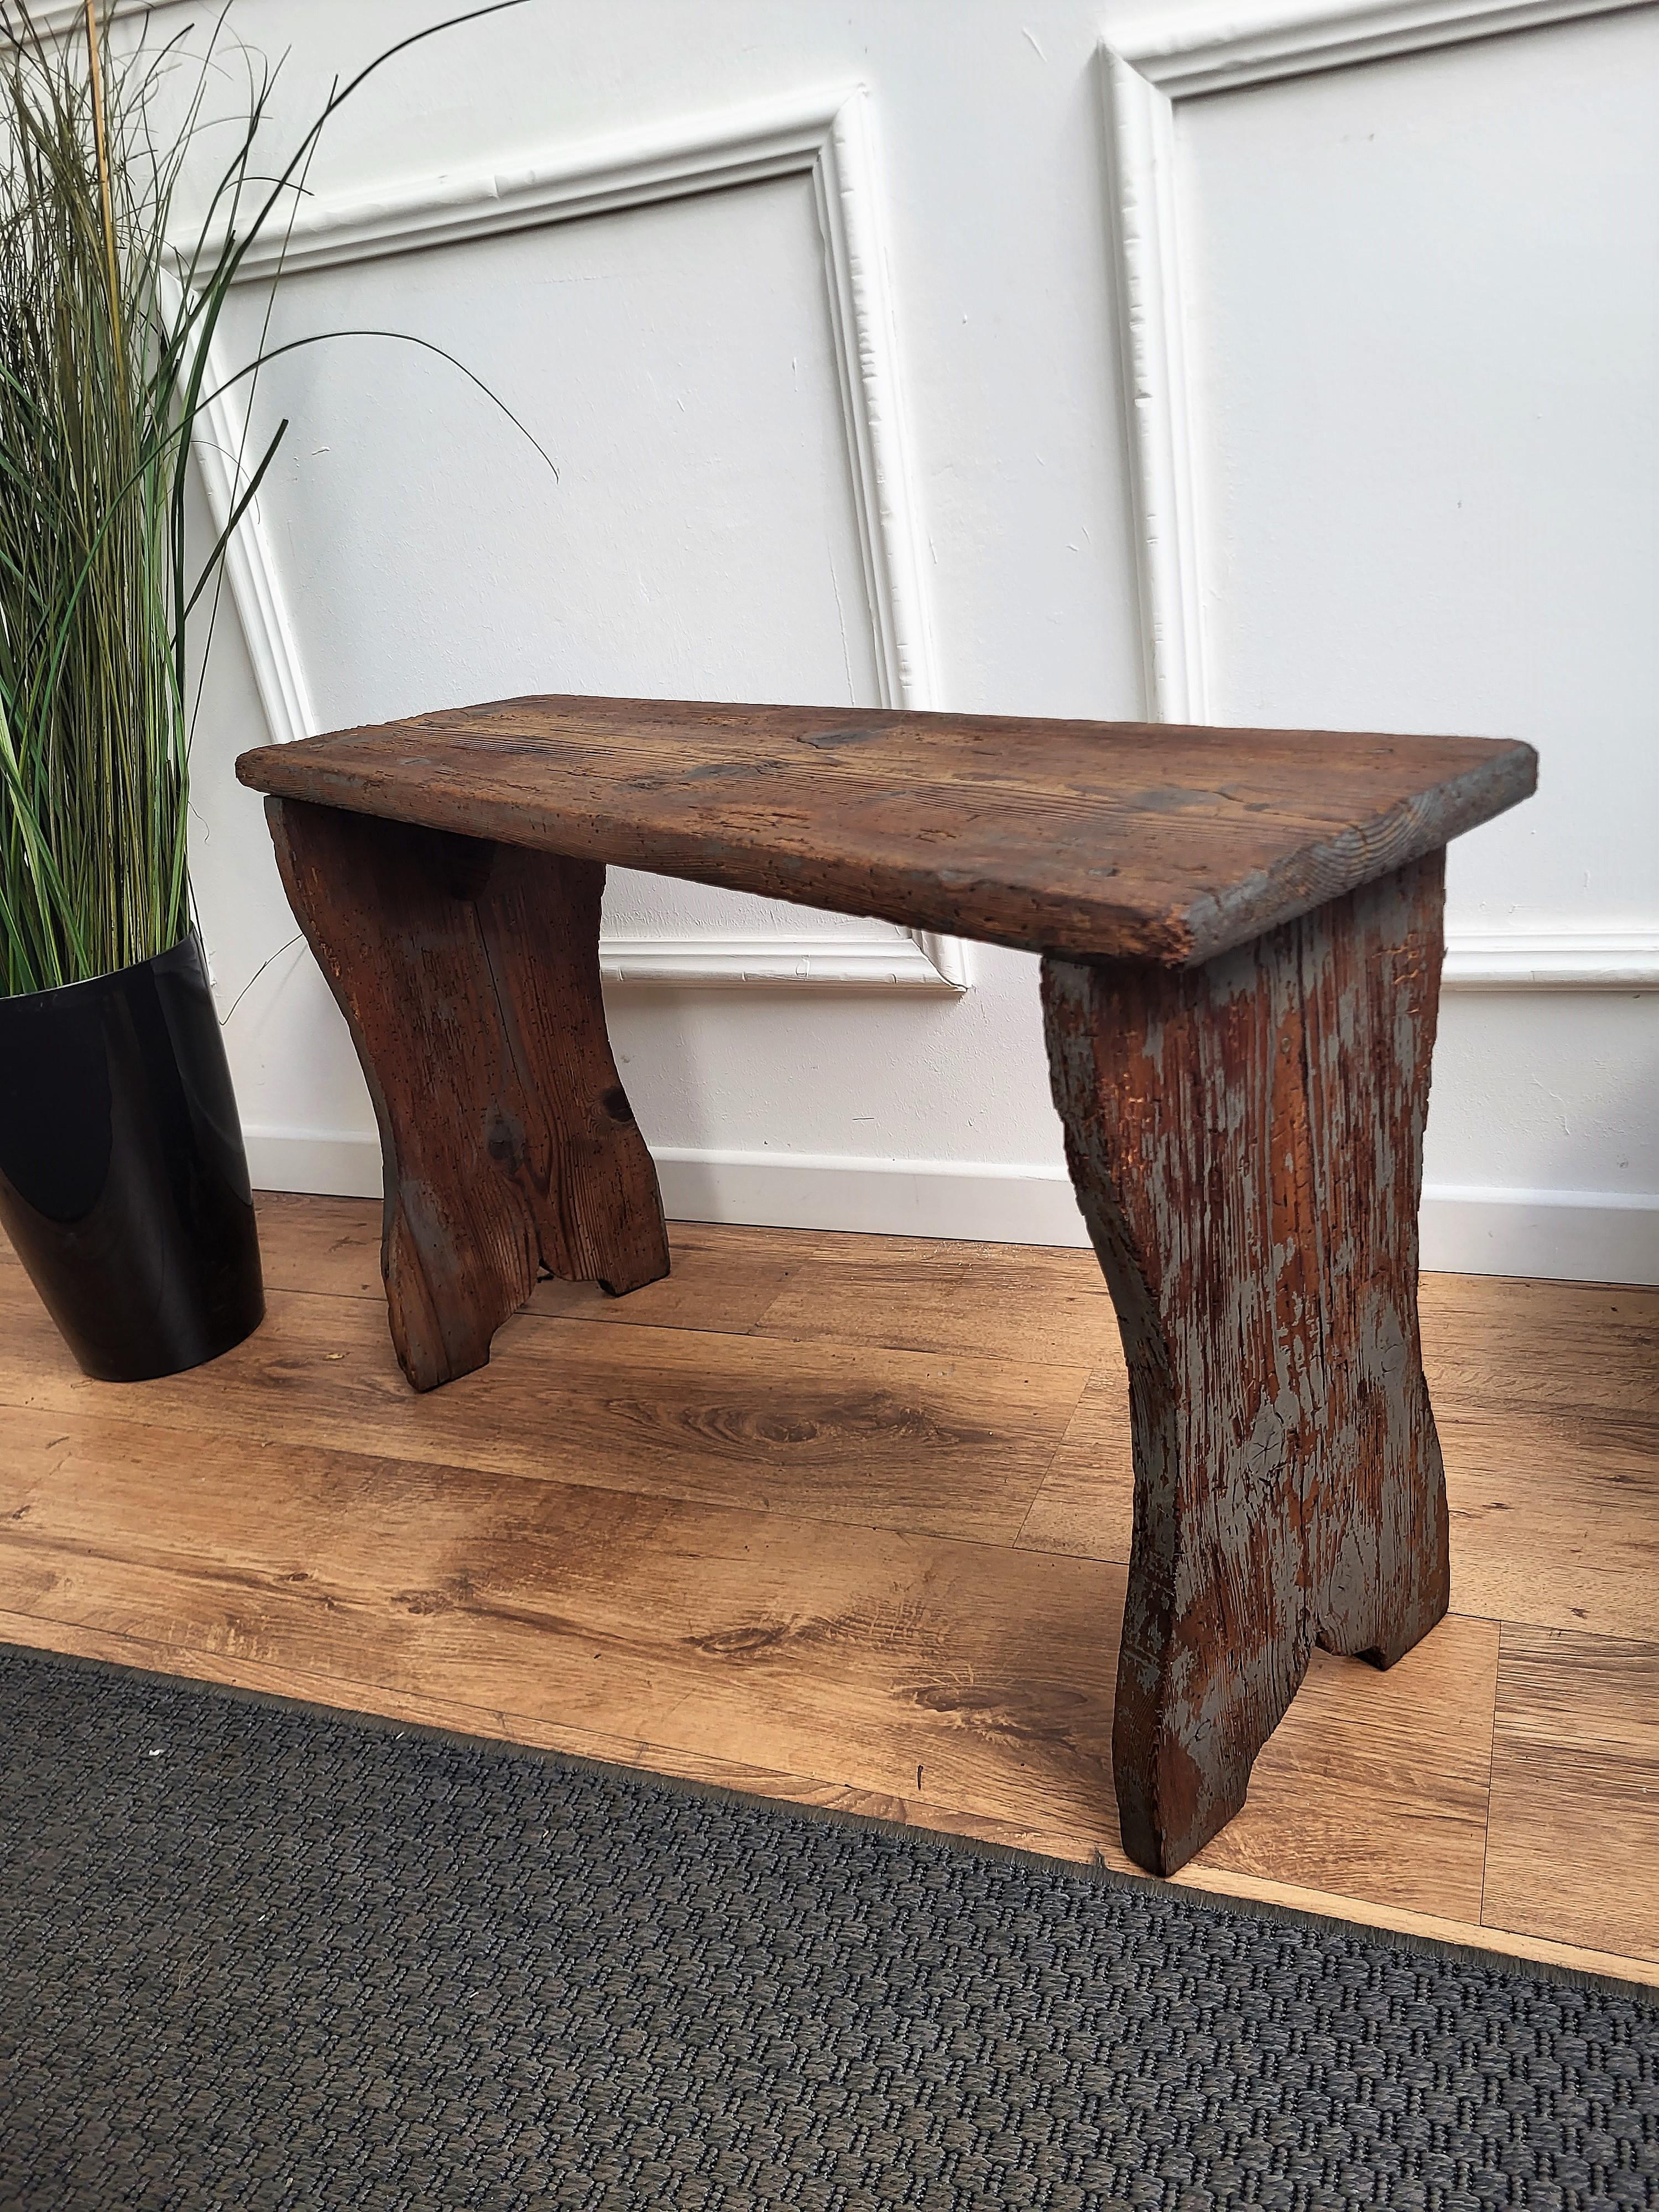 20th Century Primitive Rustic Minimal Italian Midcentury Wooden Side Table Bench Stool